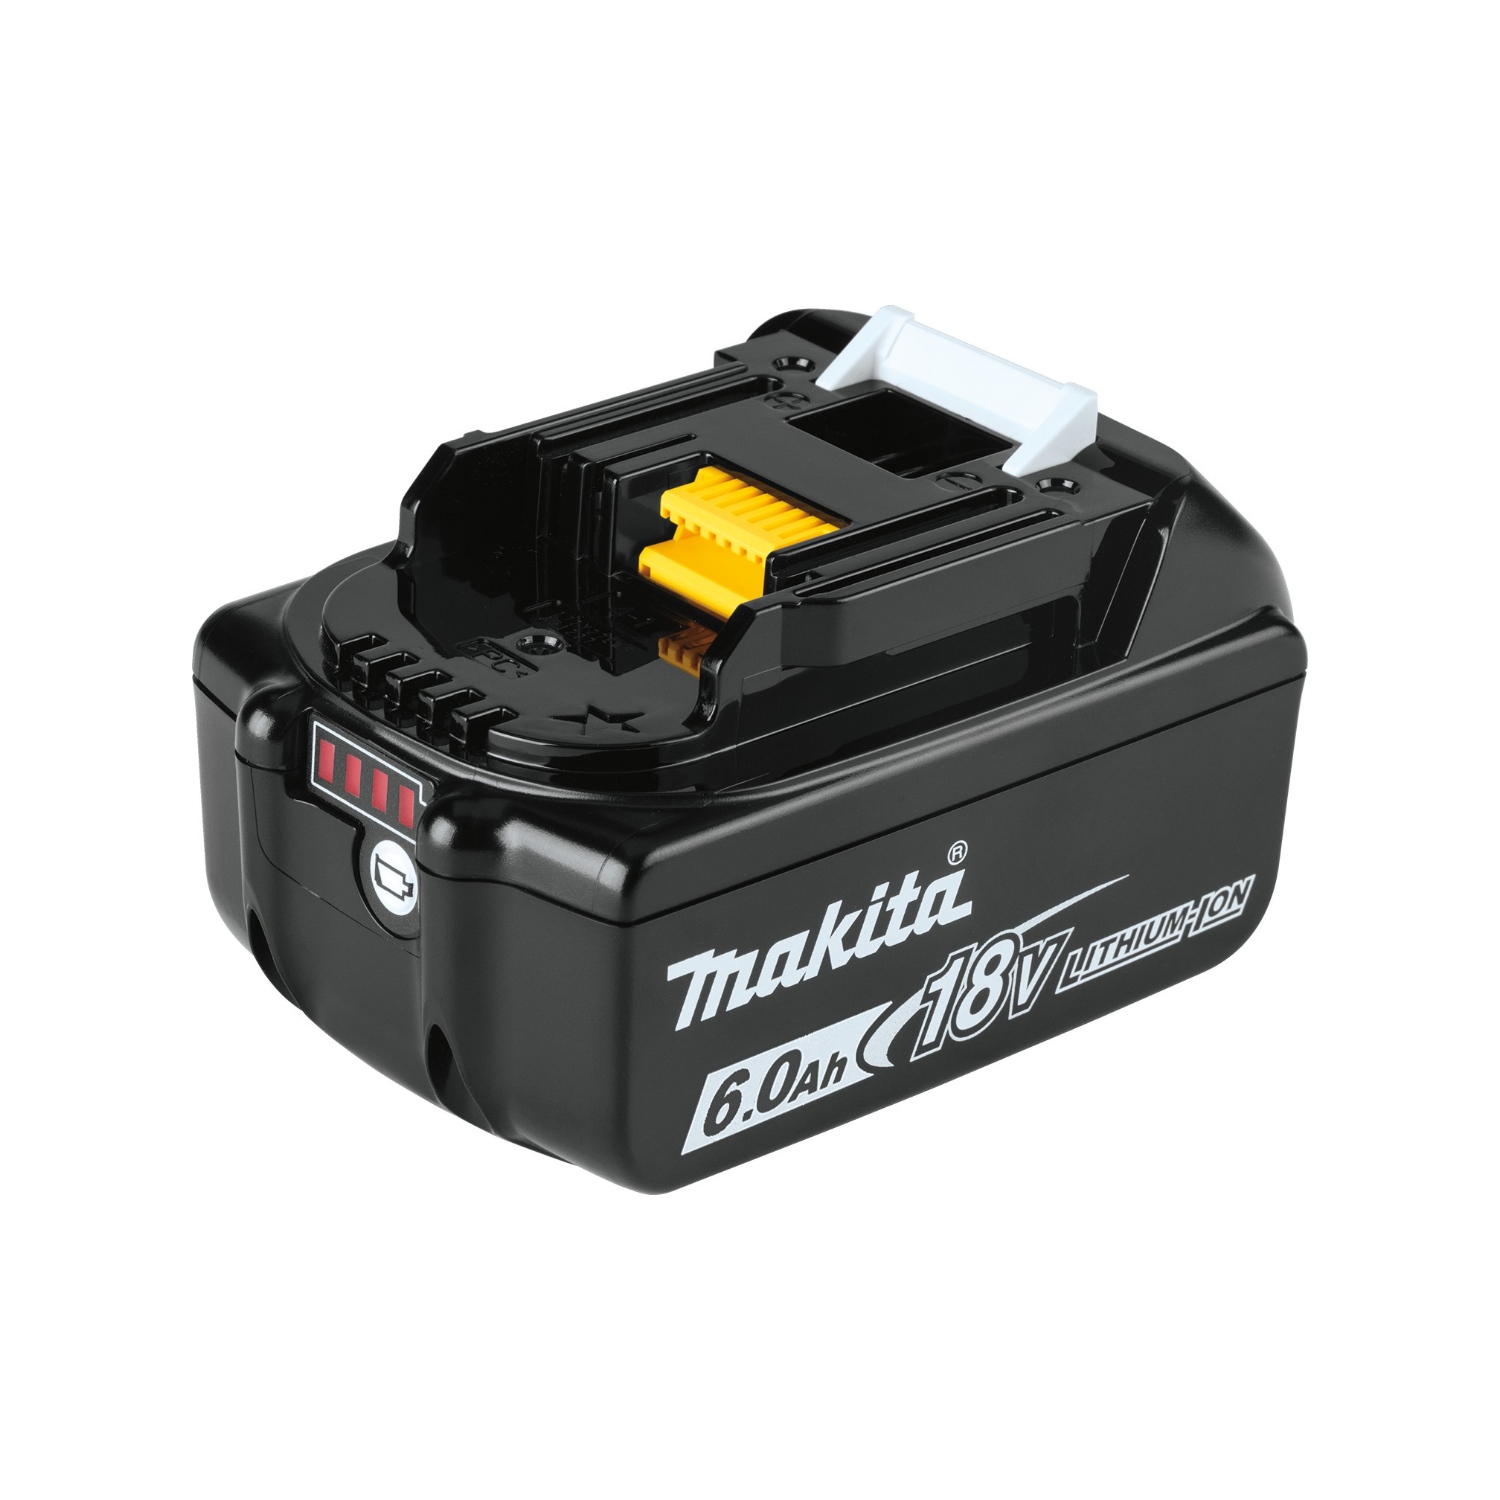 Total Es Utrolig Buy Makita Battery Type devices online | Lazada.com.ph